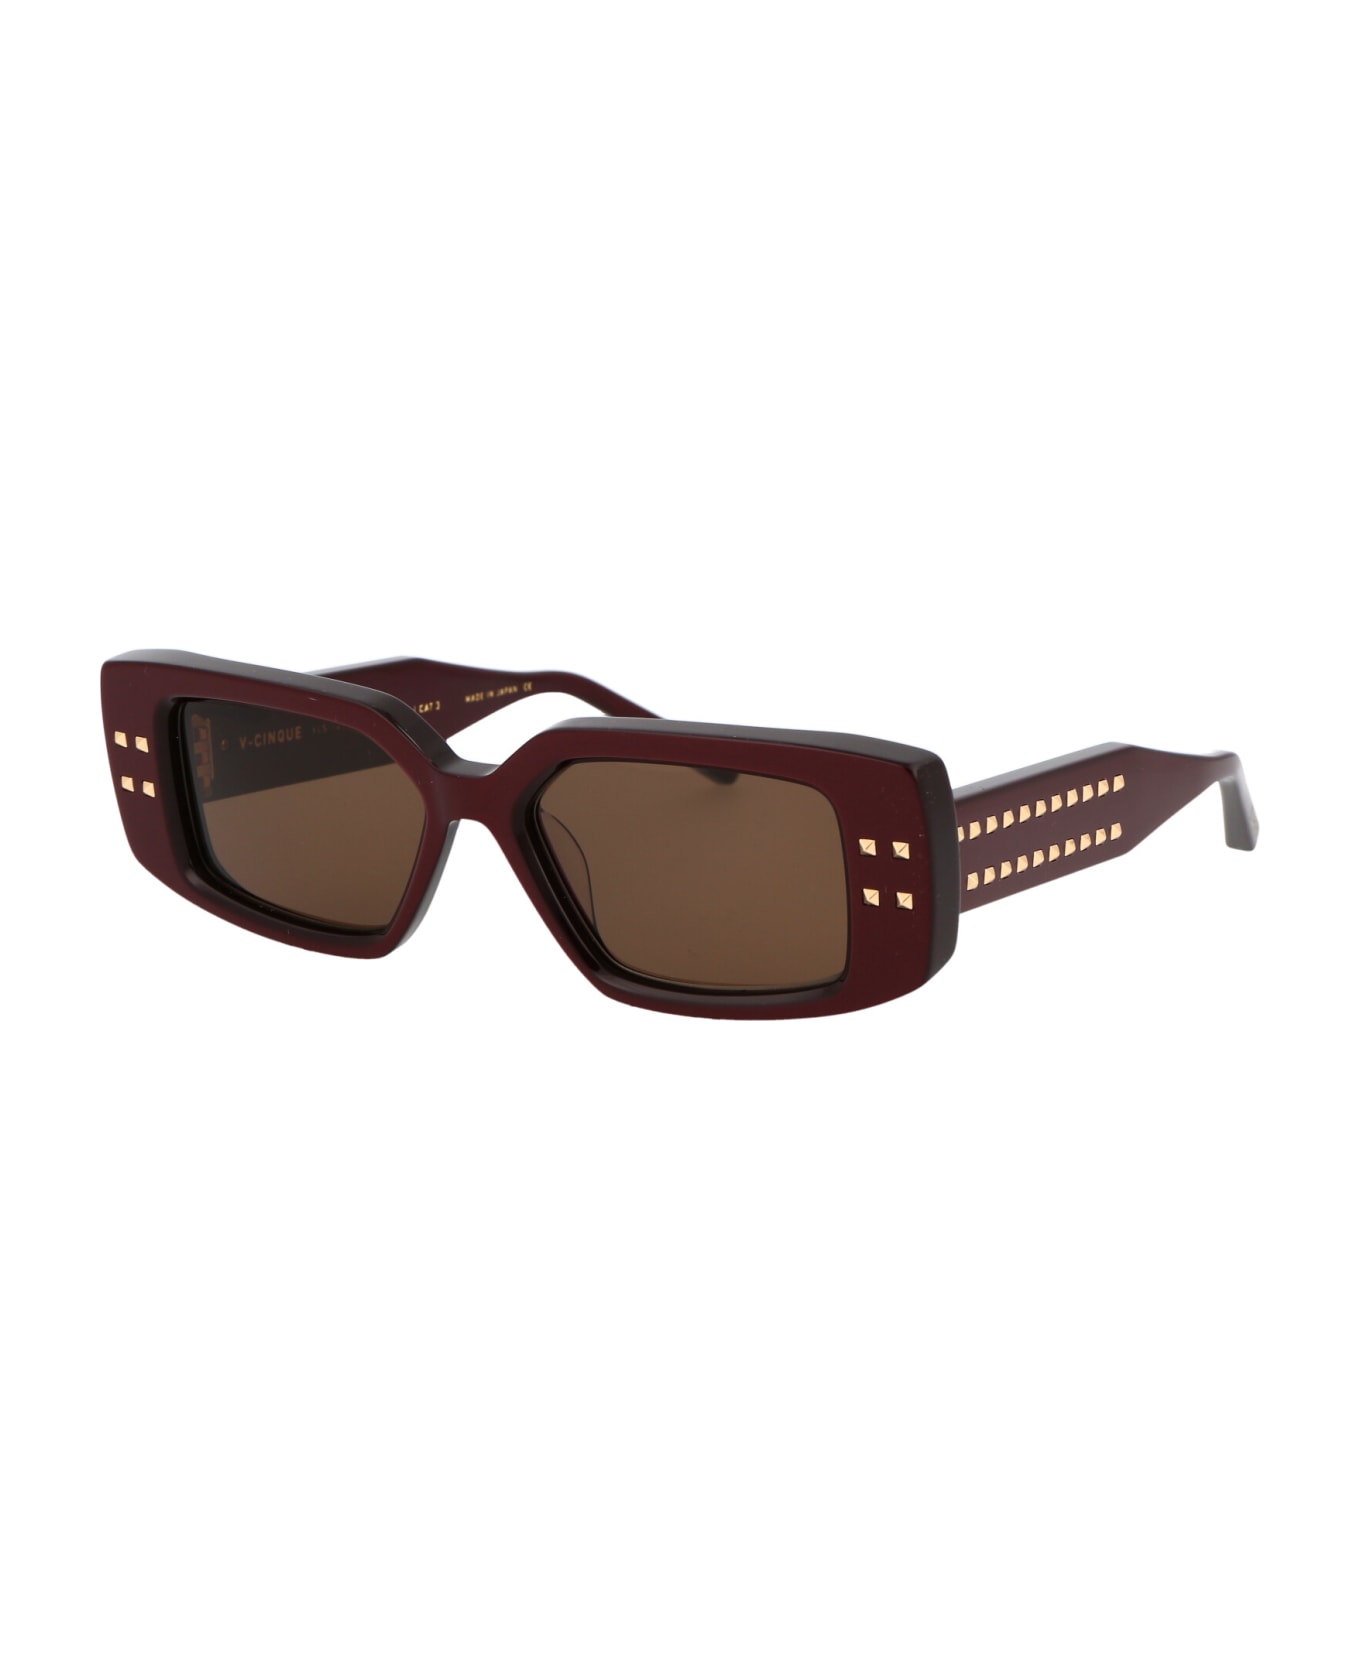 Valentino Eyewear V - Cinque TYPE Sunglasses - 108Occhiali da sole FURLA TYPE Sunglasses SFU535 WD00035-BX0728-01B00-4-401-20-CN-D Talco h